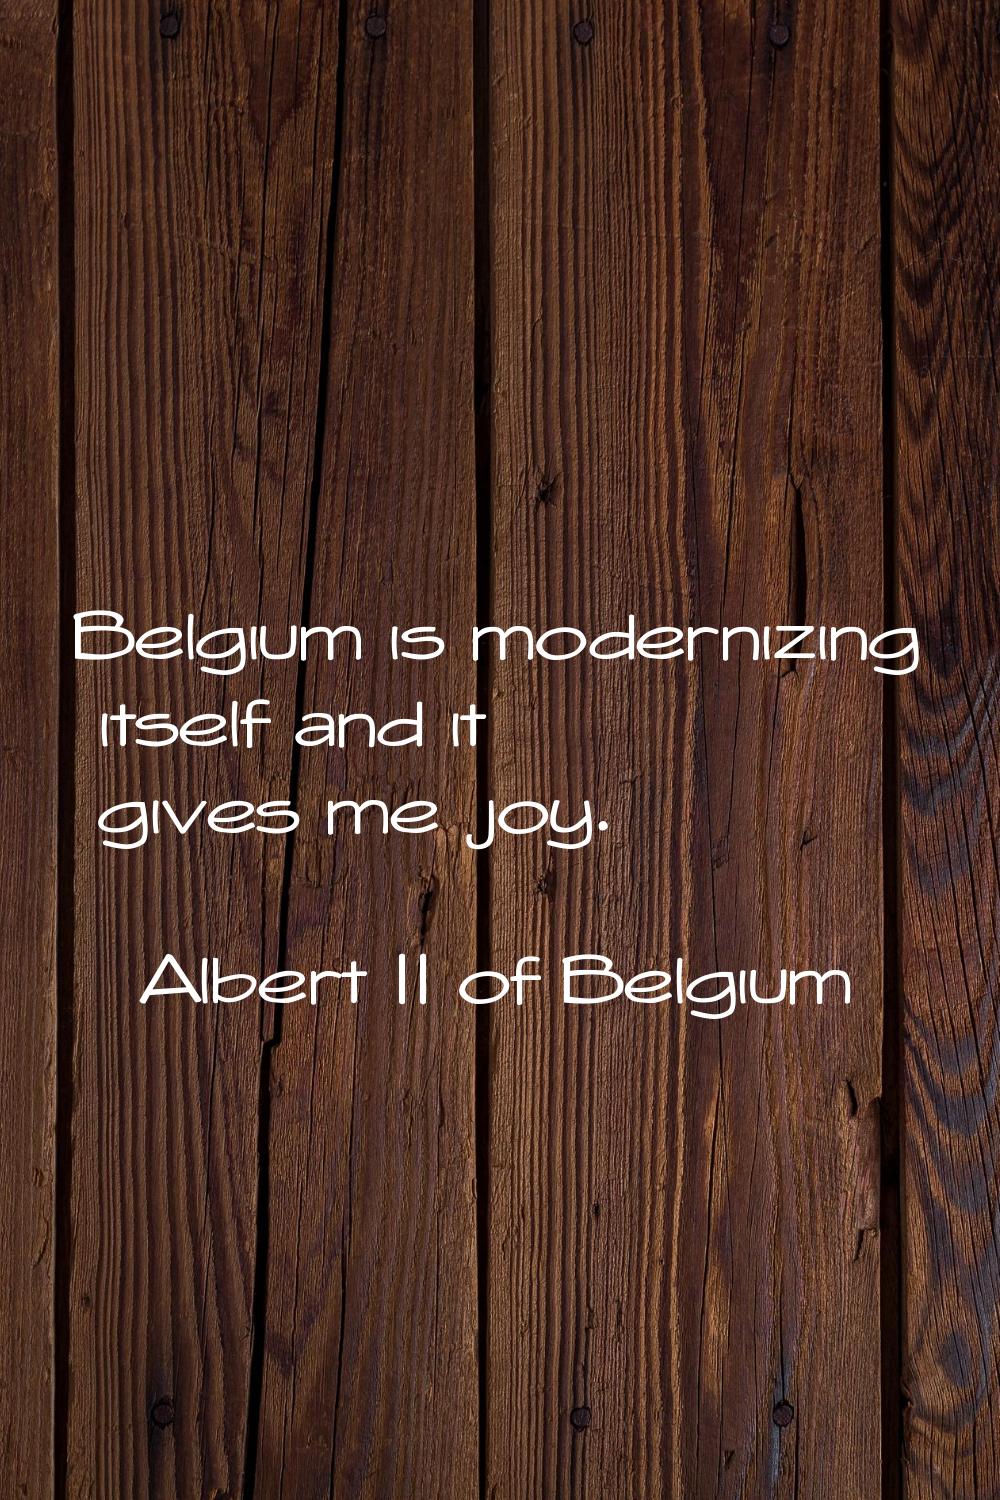 Belgium is modernizing itself and it gives me joy.